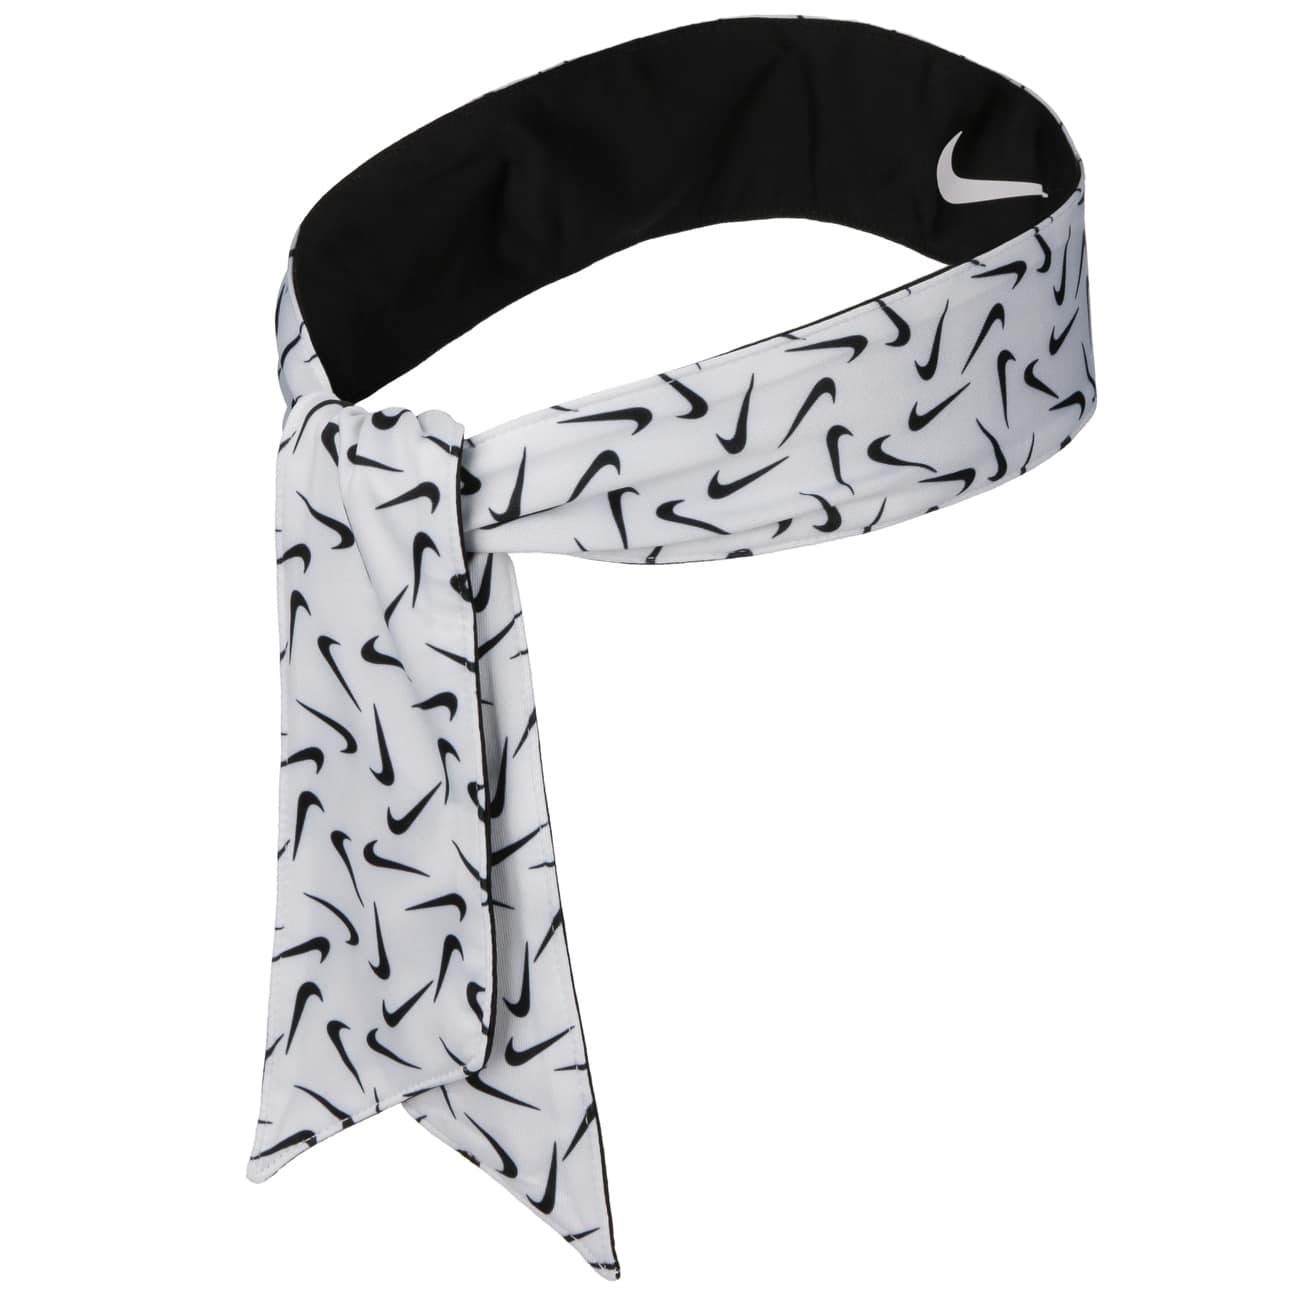 Bandeau Nike dri-fit 4.0 - Nike - Marques - Textile